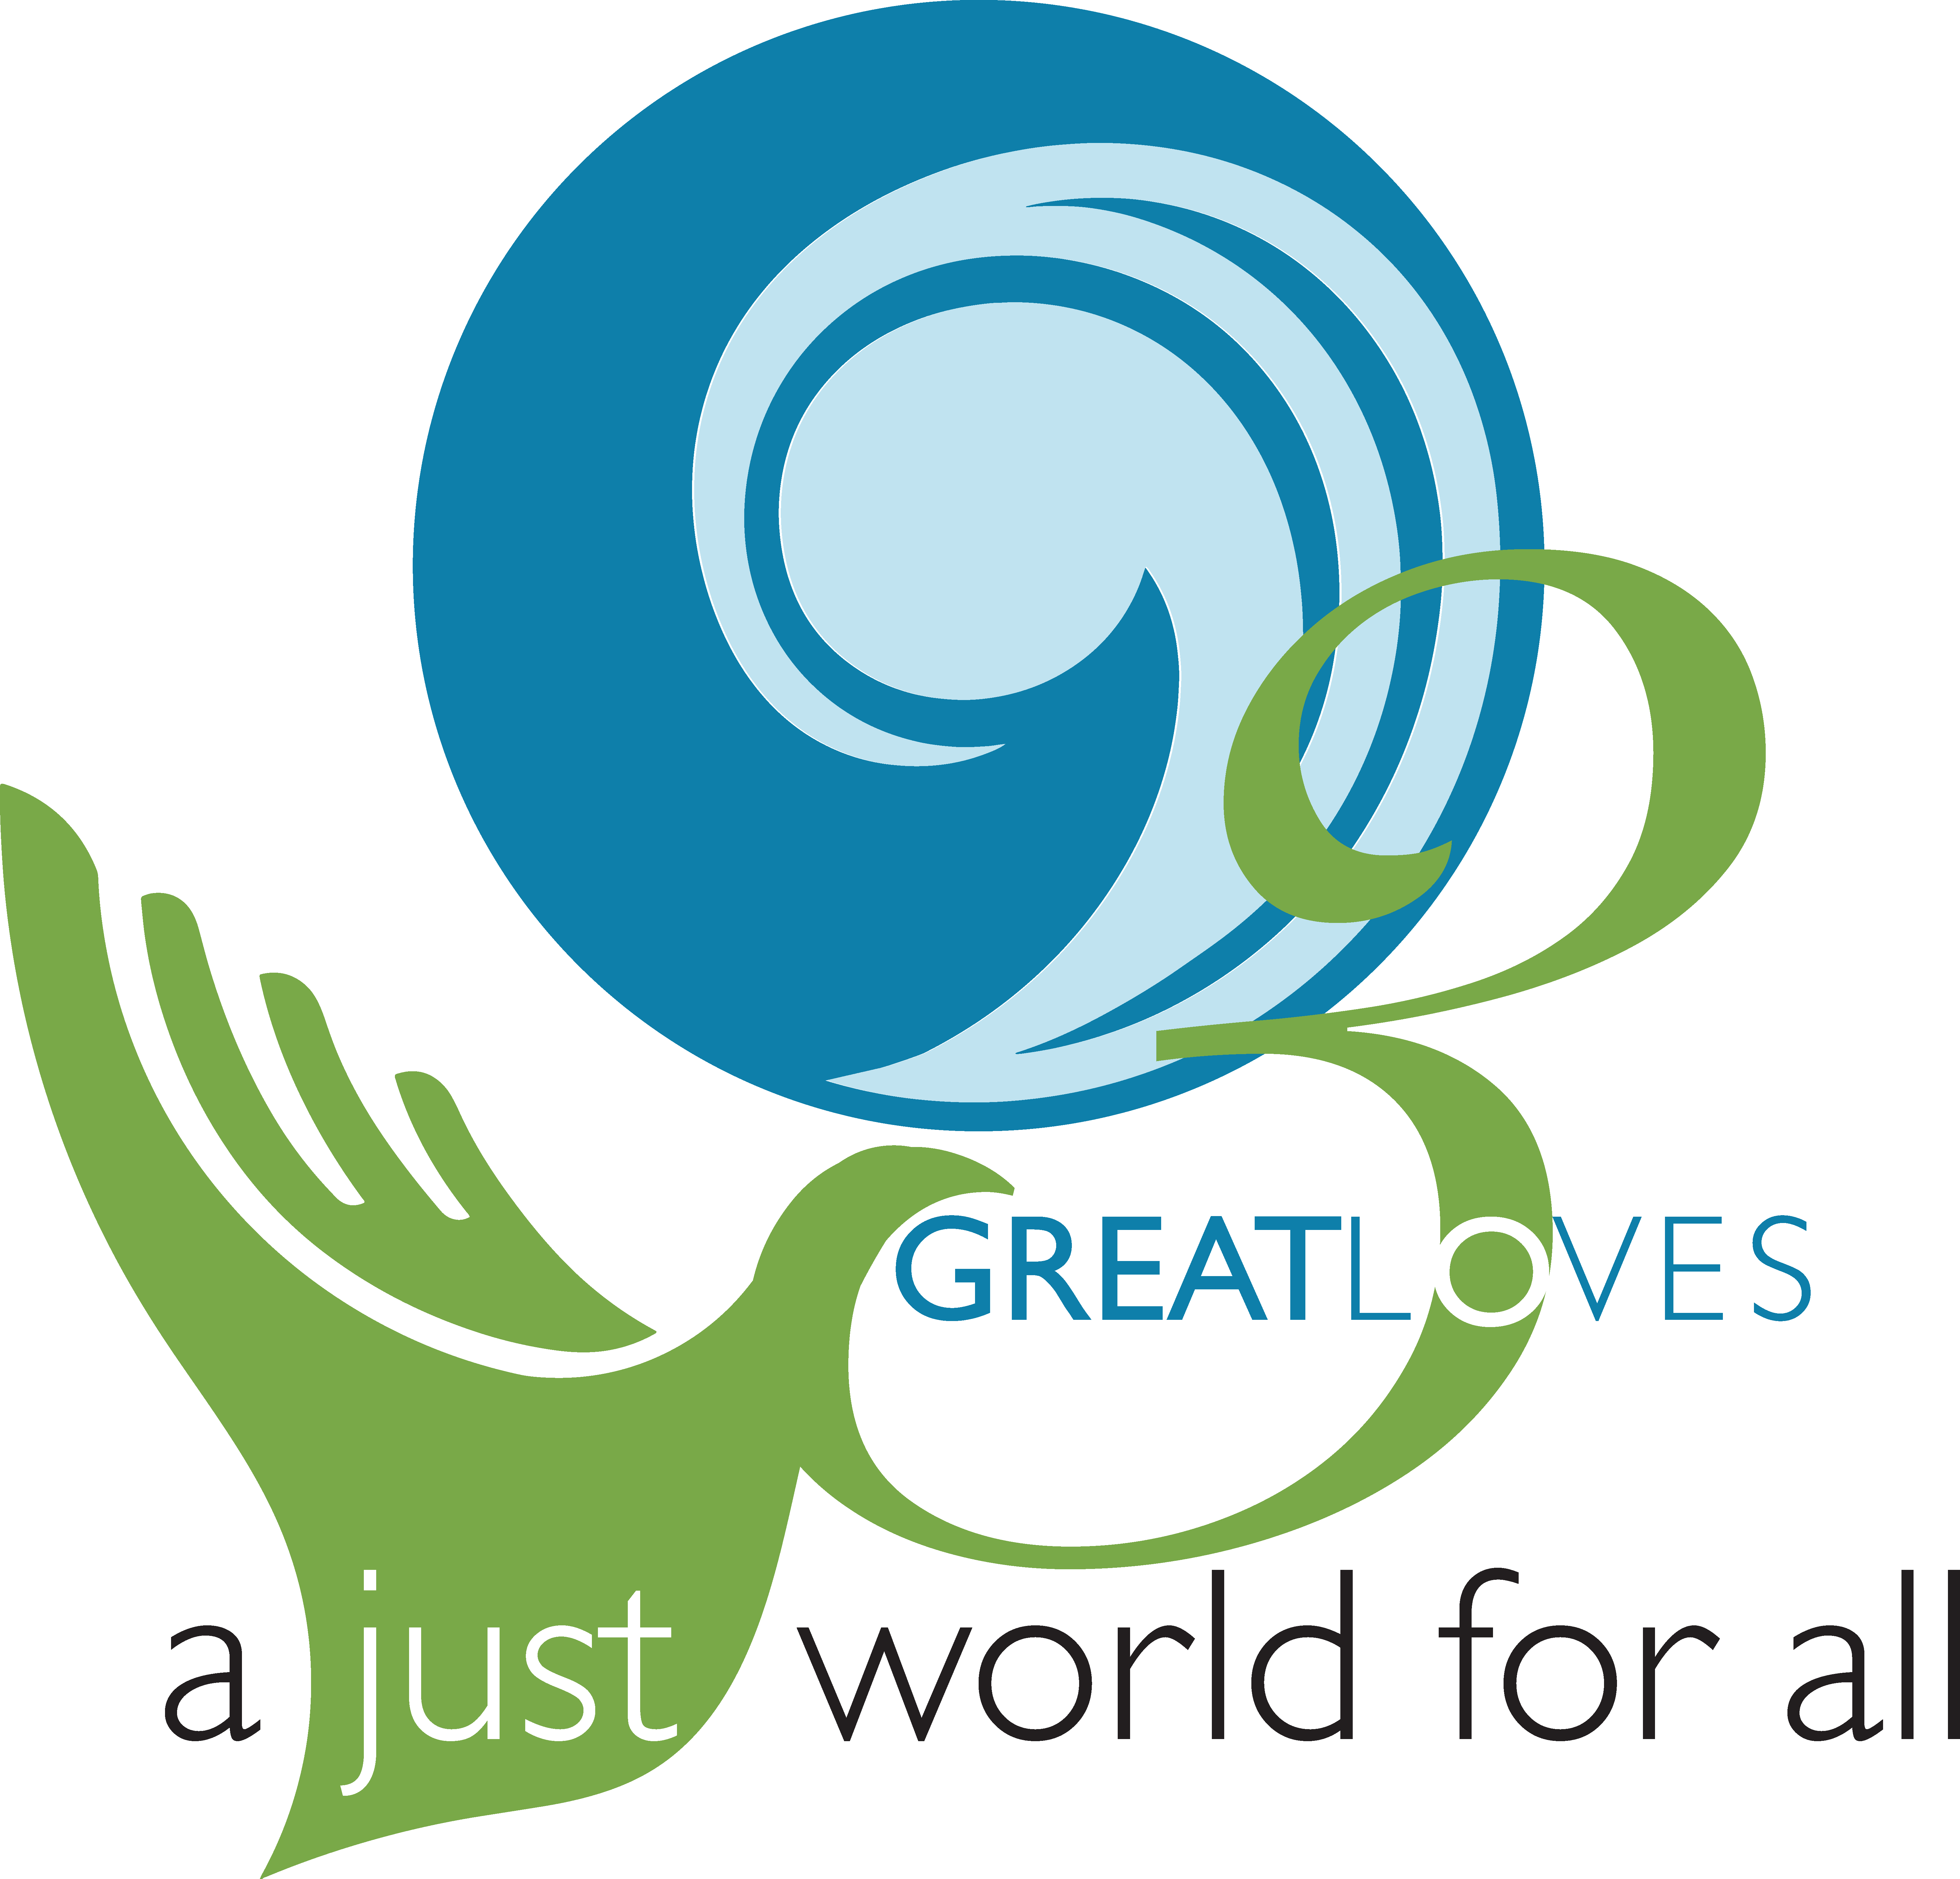 3 Great Loves Logo - 3 Great Loves Ucc (6497x6230)